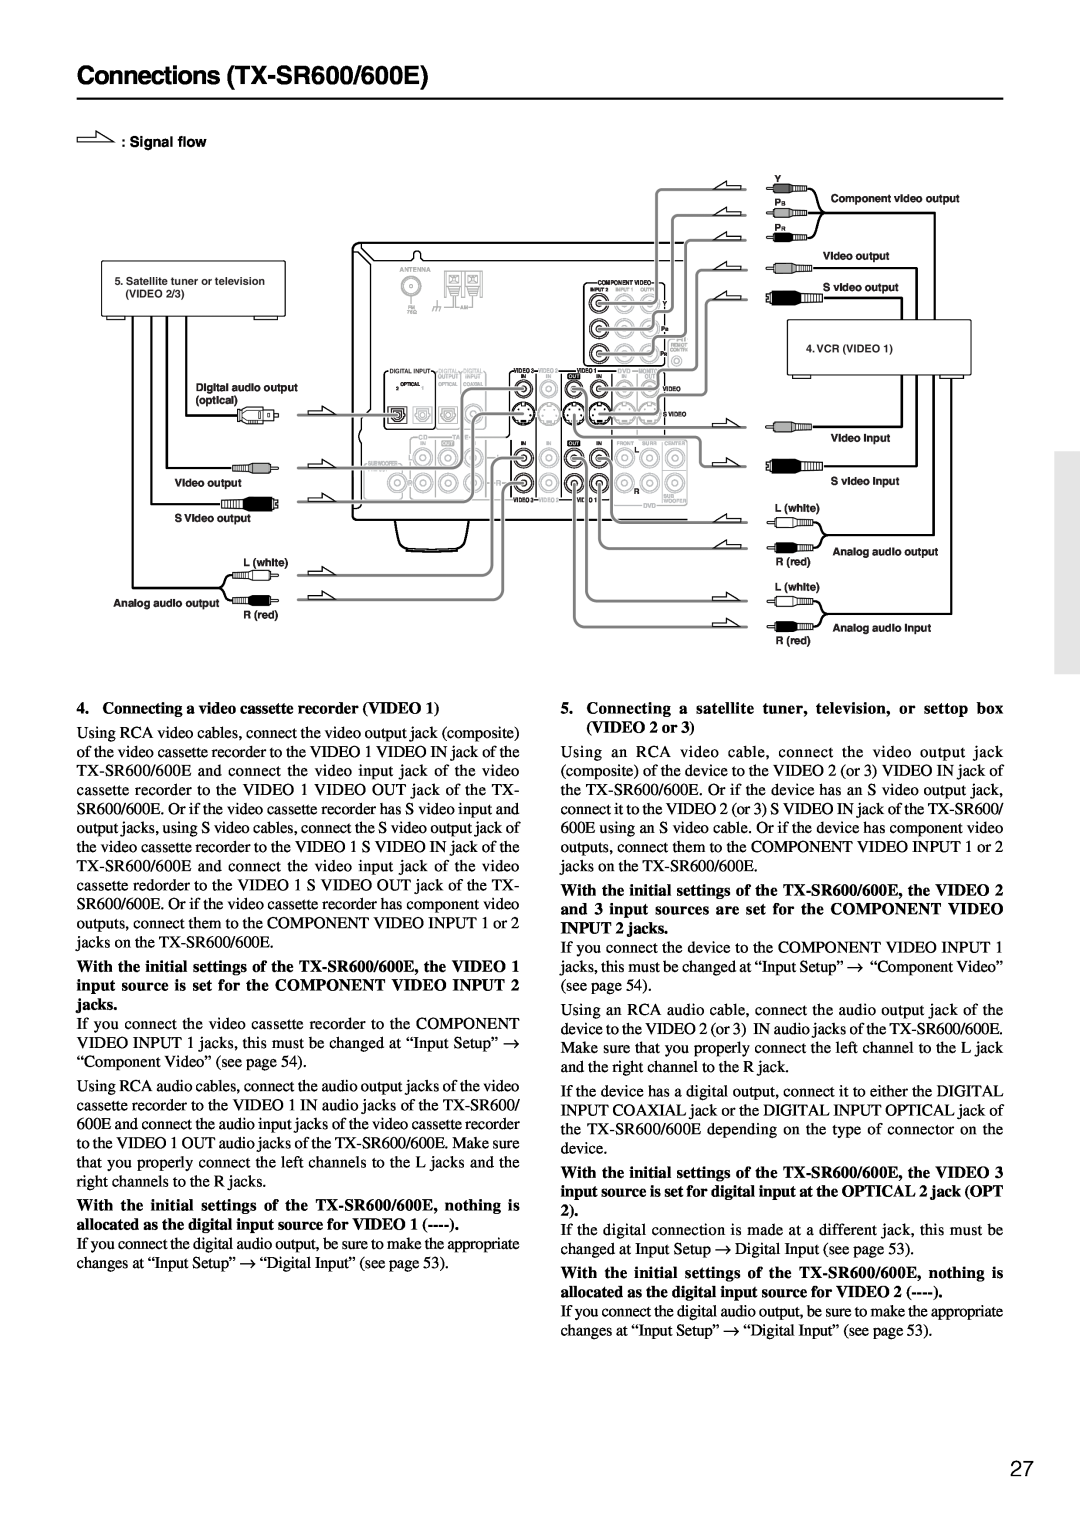 Onkyo TX-SR700/700E instruction manual Connections TX-SR600/600E, Connecting a video cassette recorder VIDEO 